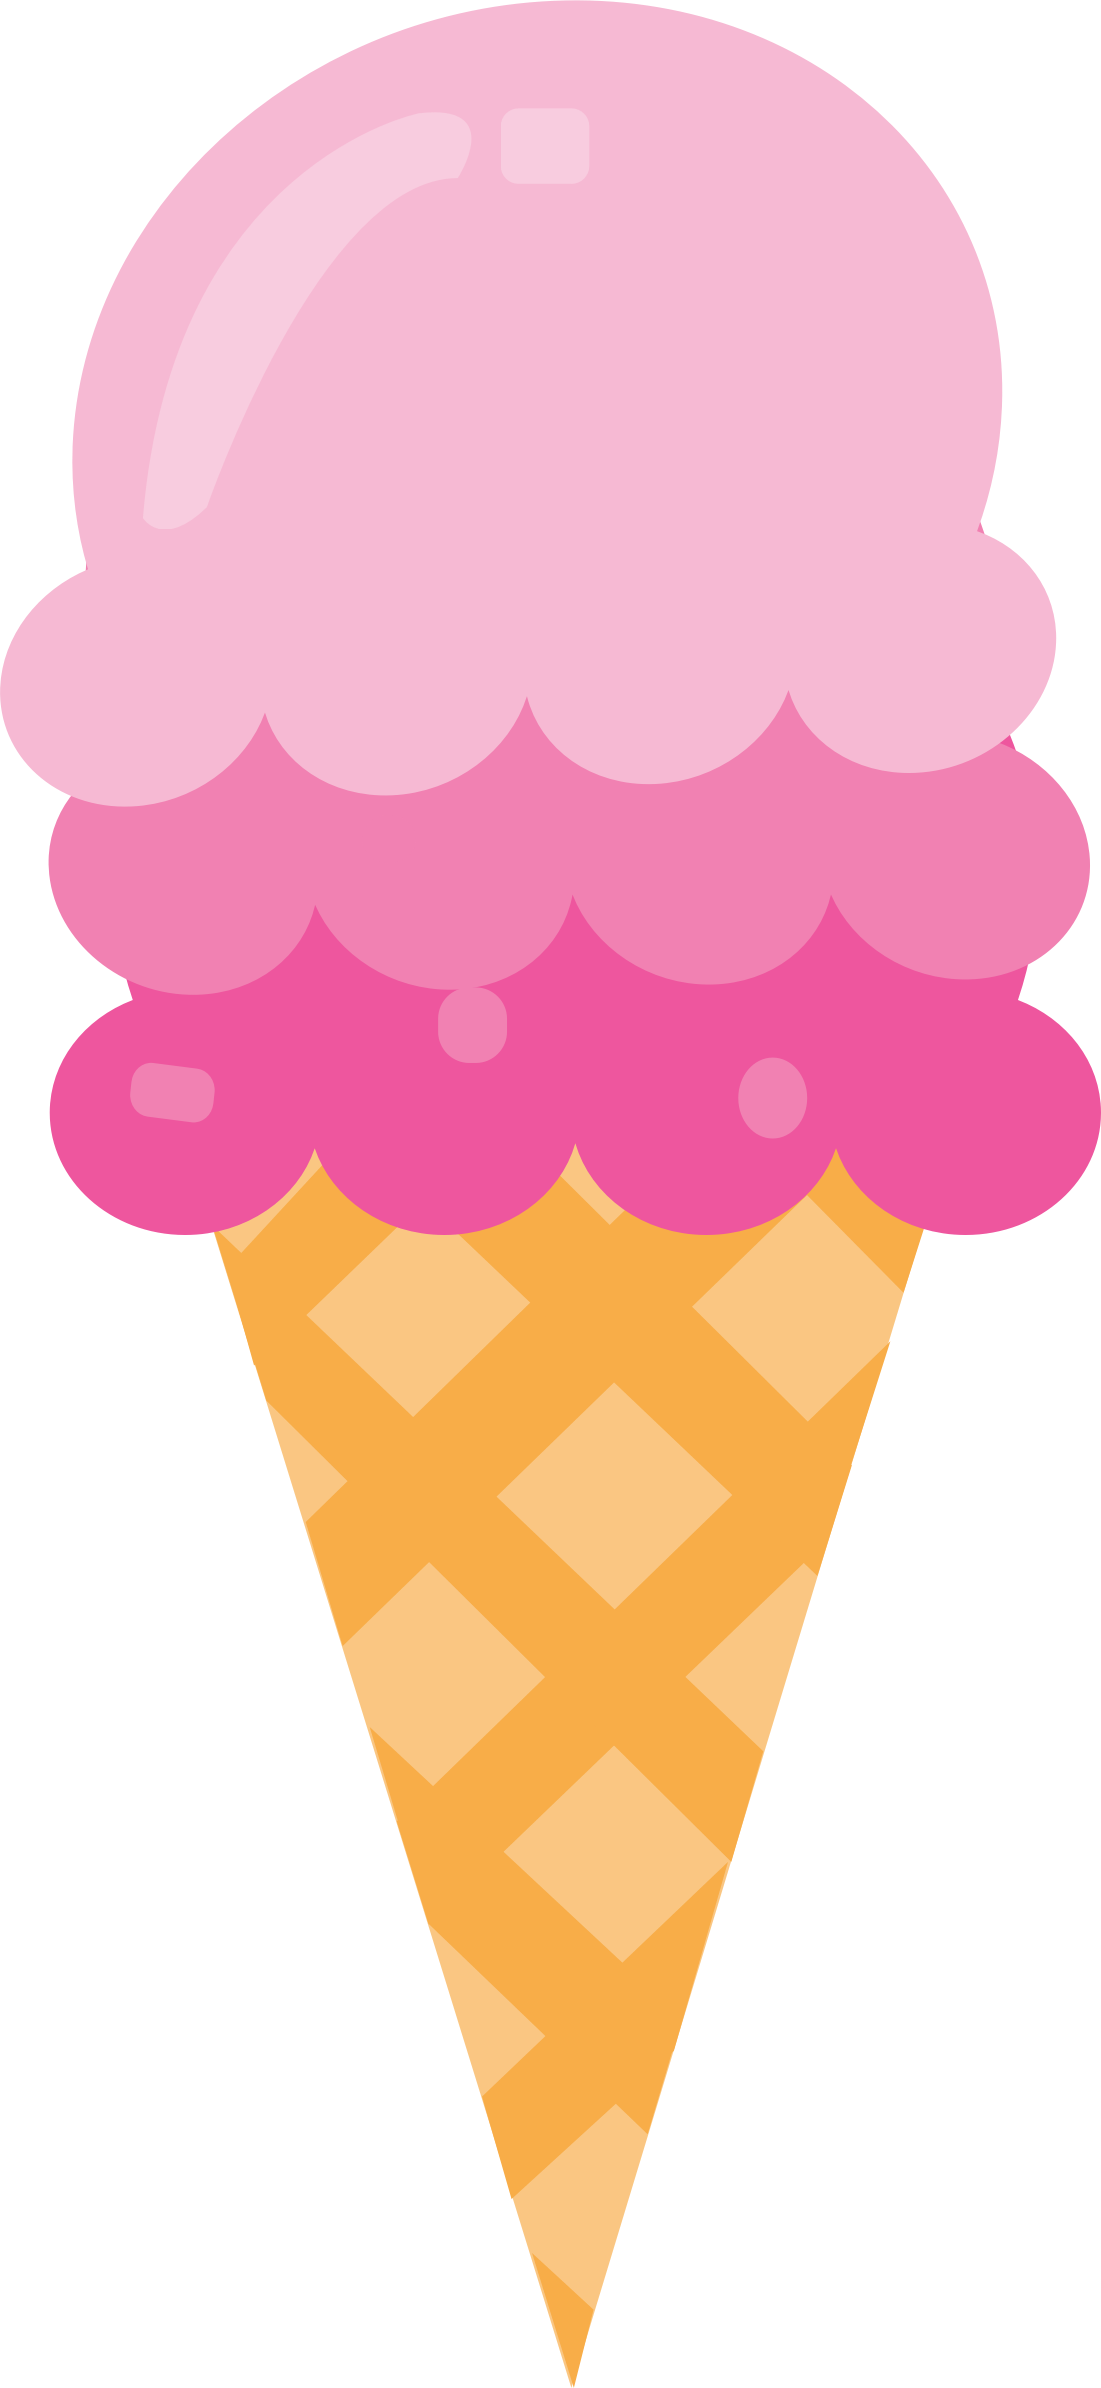 Big Image - Ice Cream Cone Clipart.